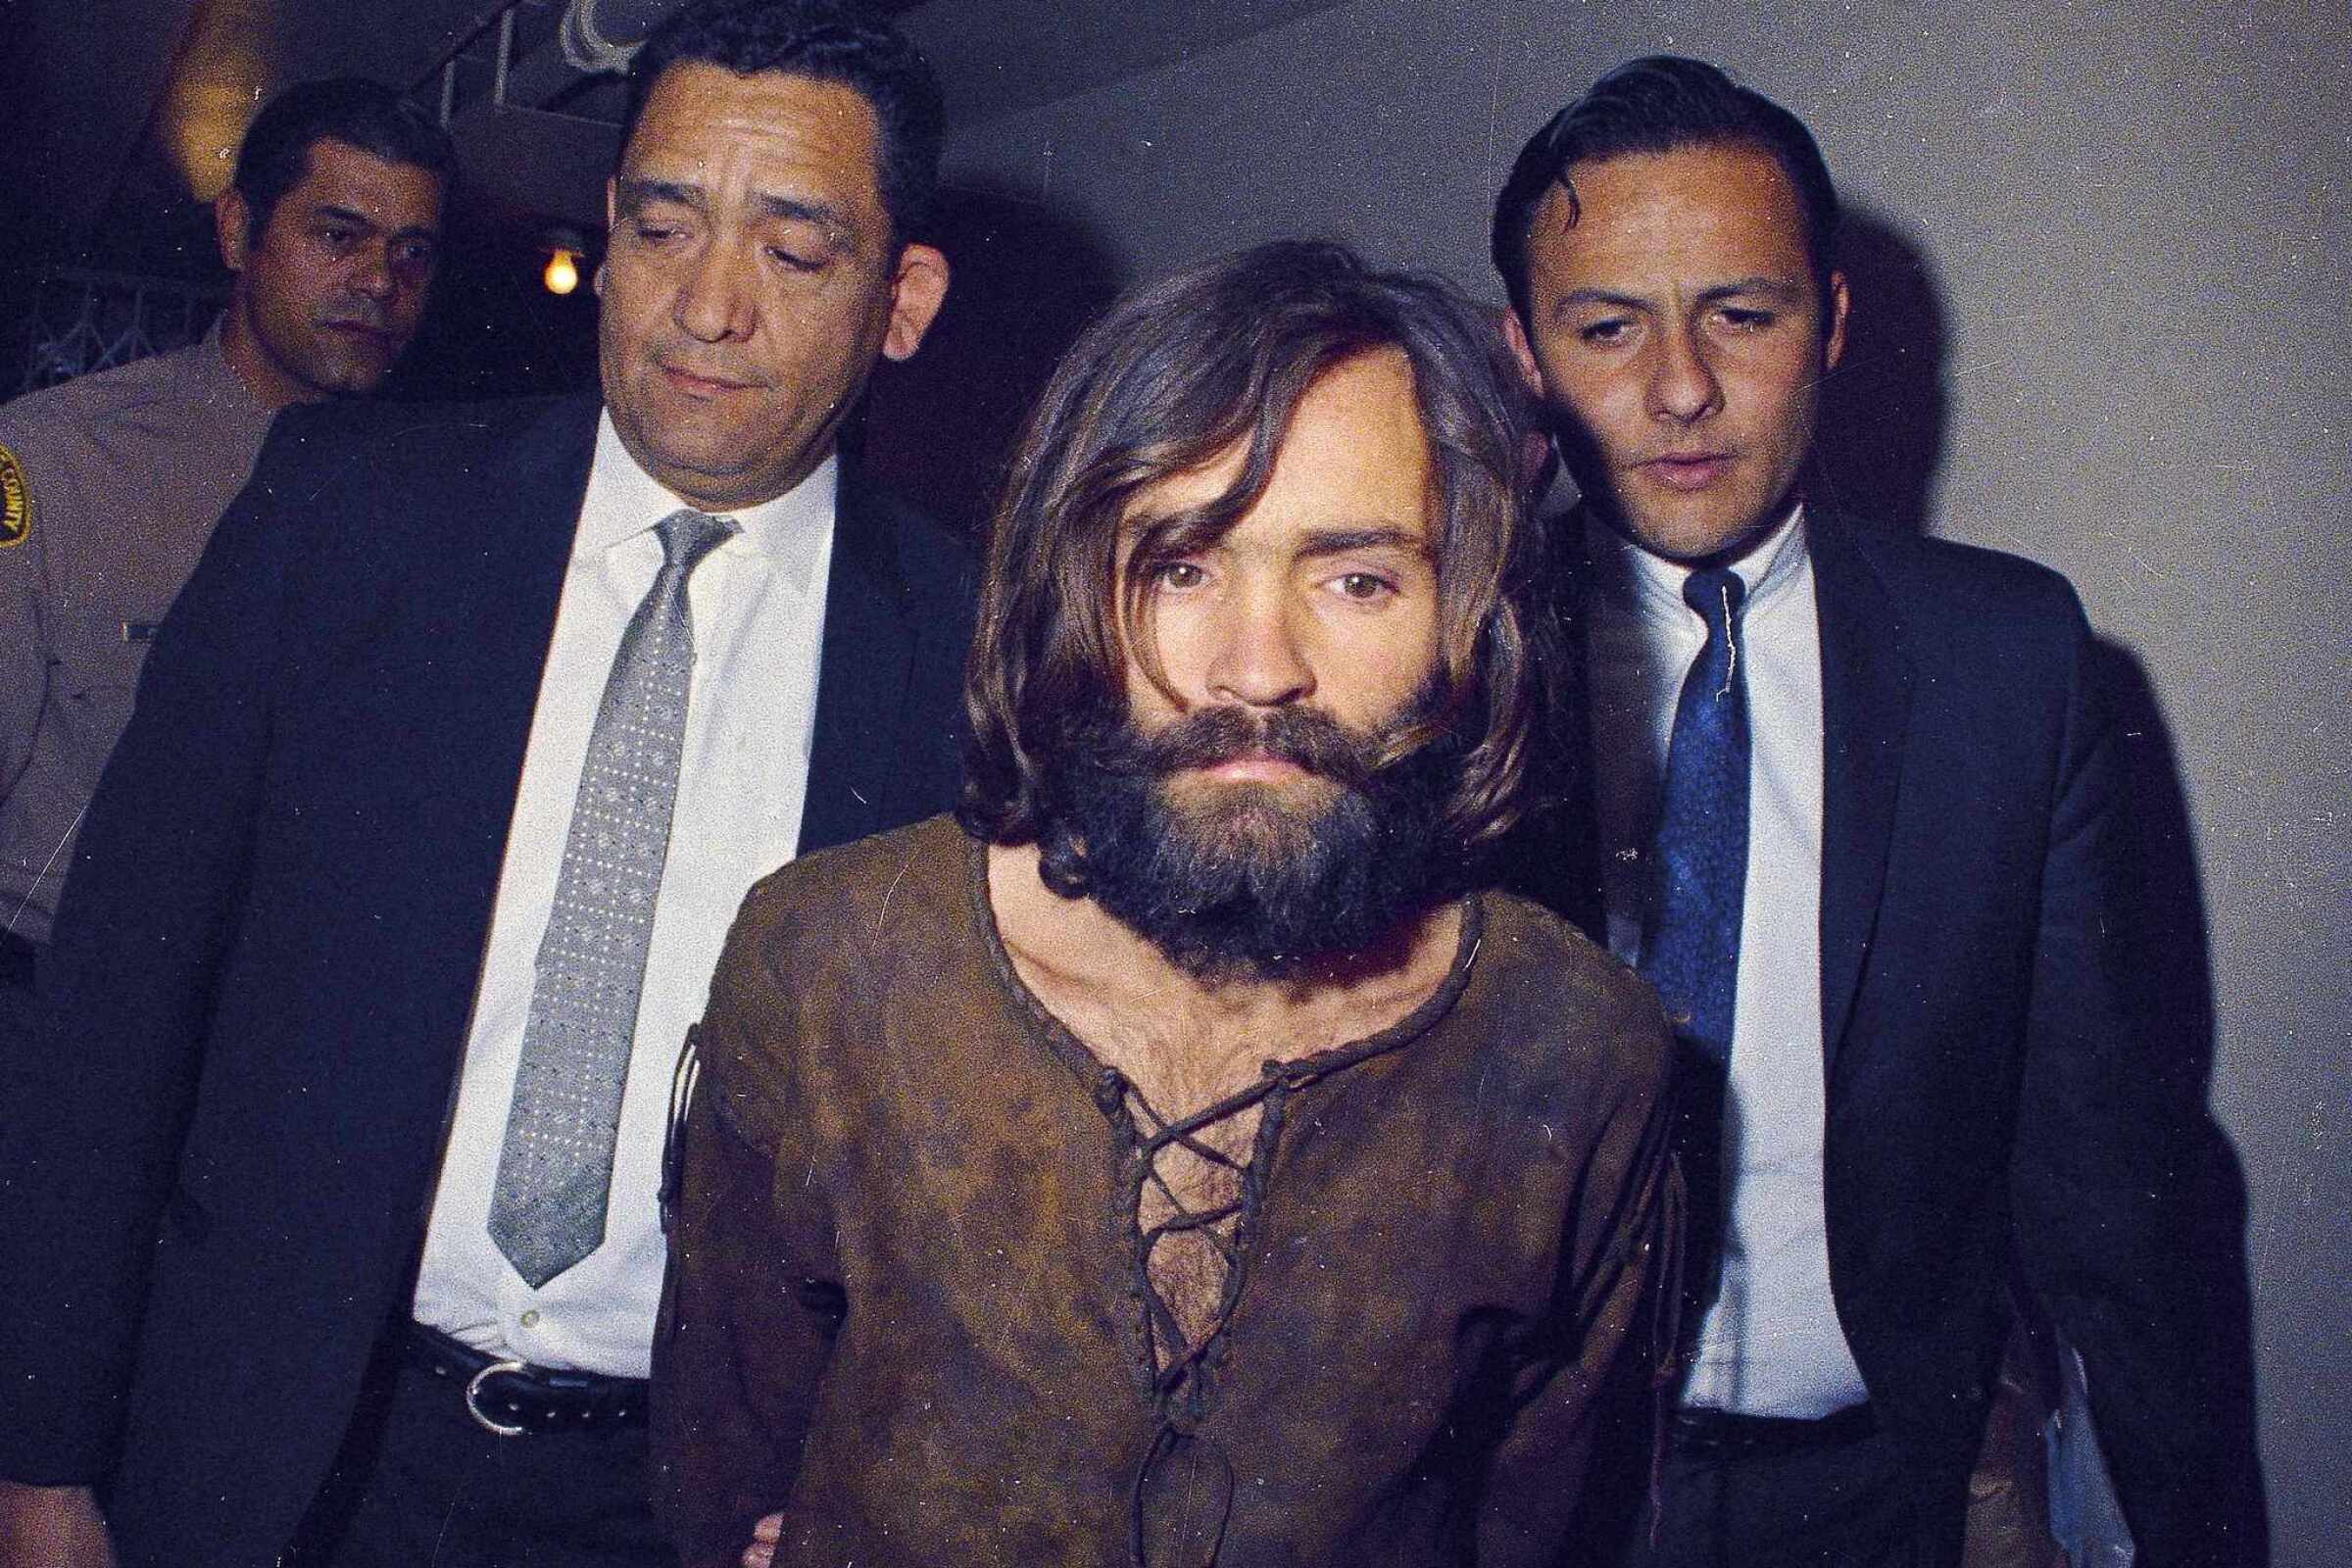 Charles Manson escorted to arraignment